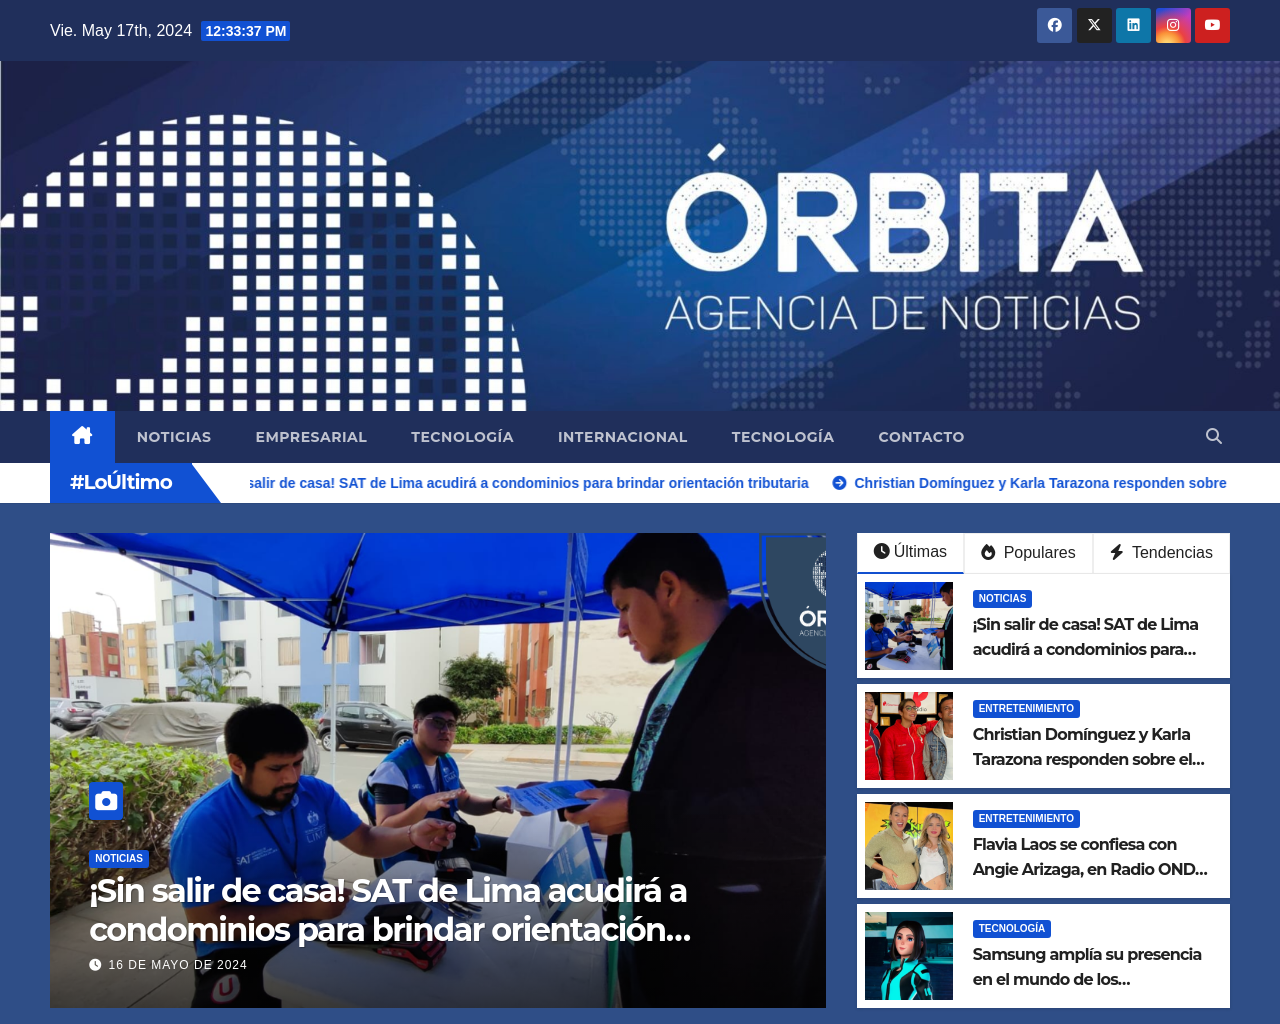 agenciaorbita.org